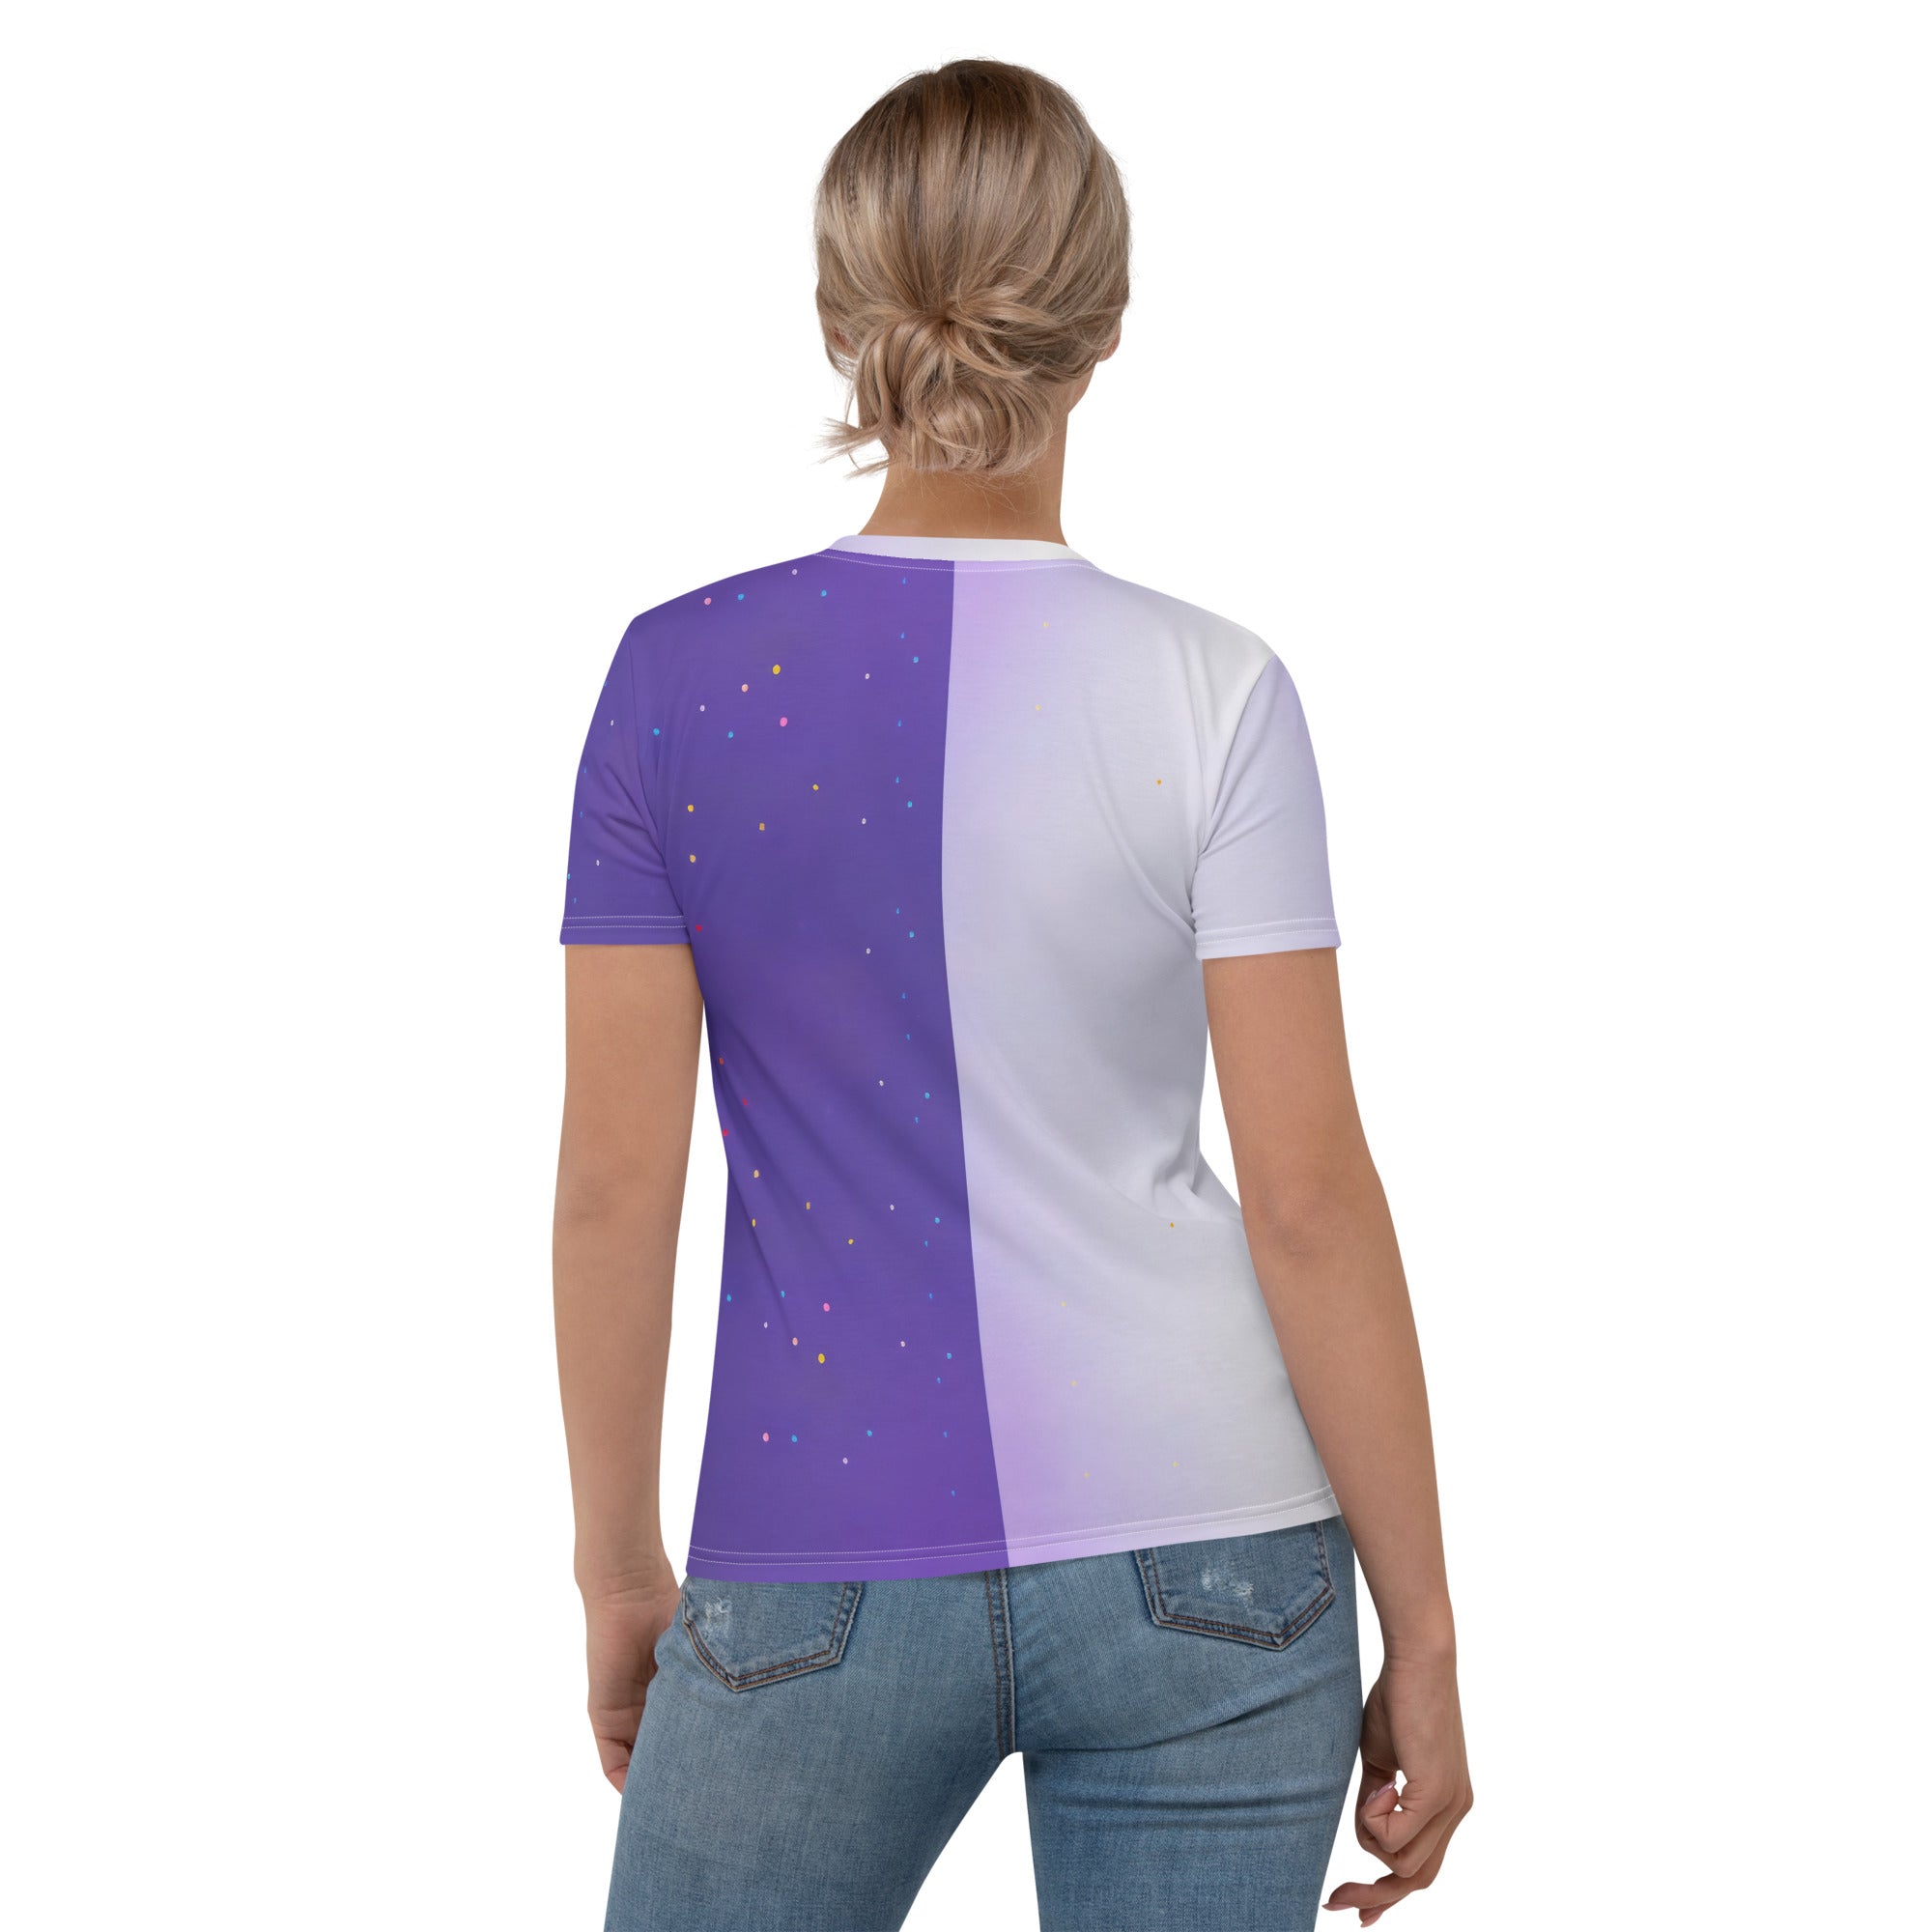 Stylish women's crew neck T-shirt featuring Sakura Nightfall pattern.